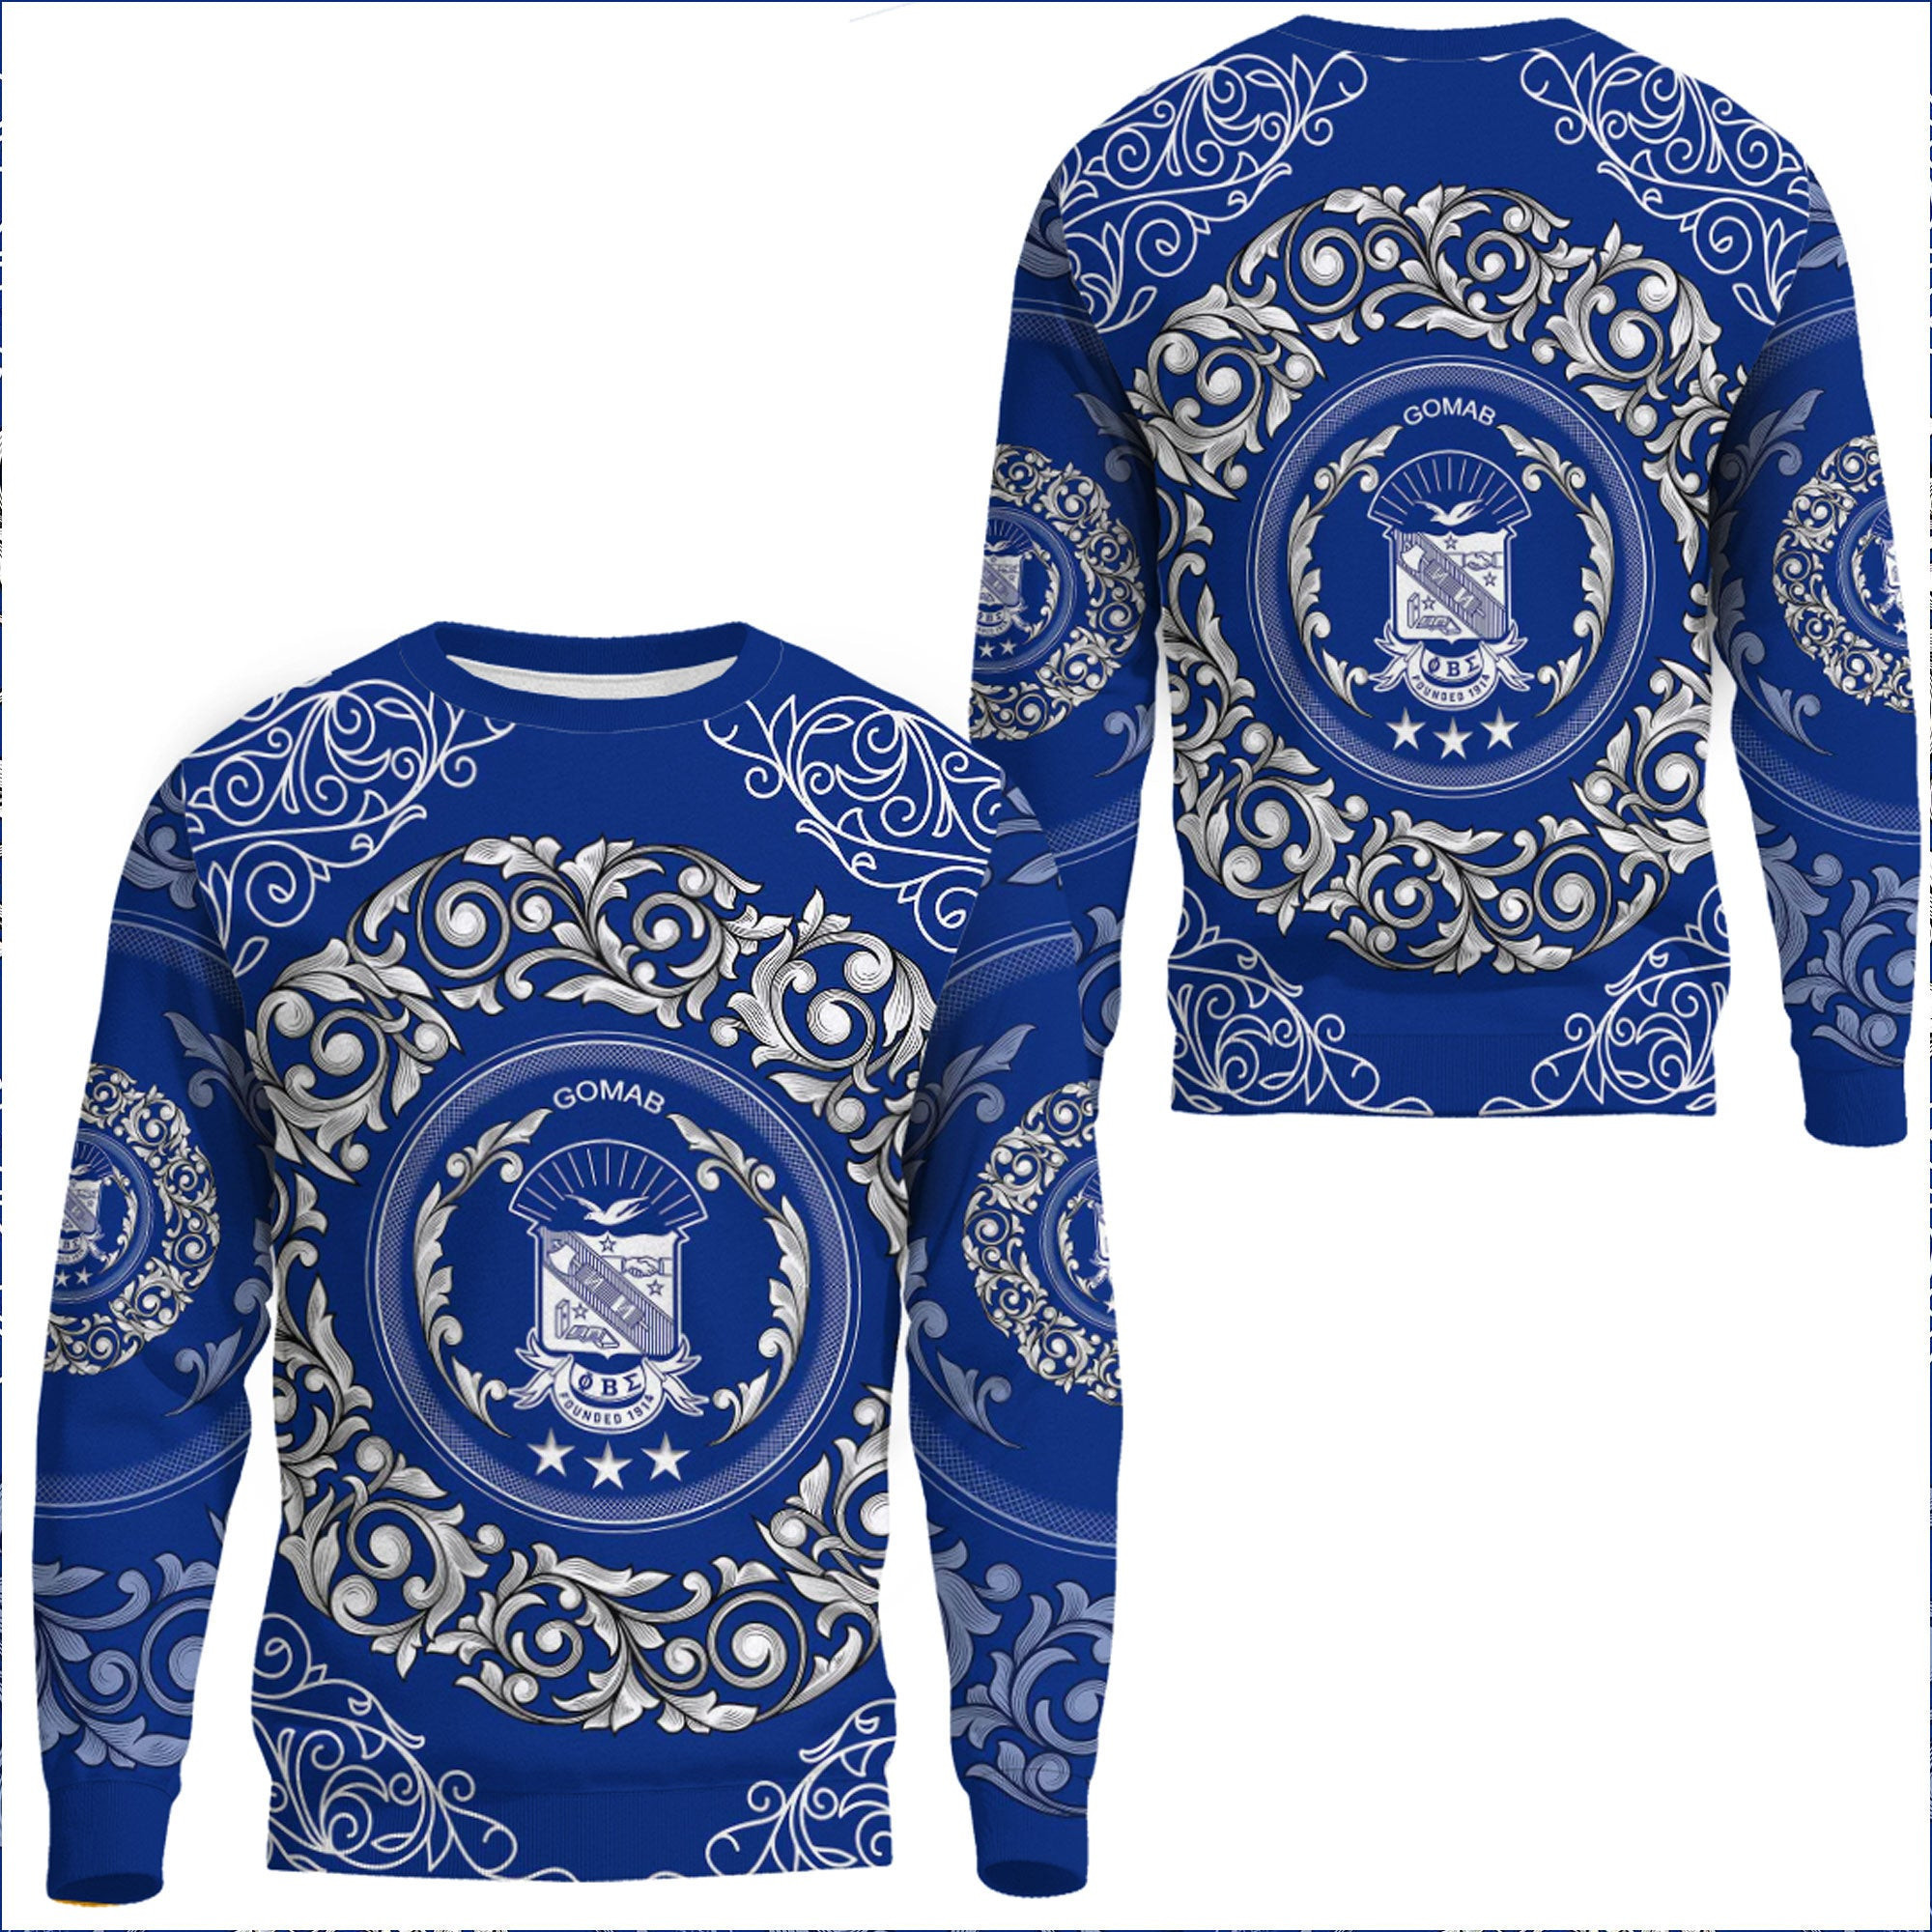 Africa Zone Clothing – Phi Beta Sigma Fraternity Sweatshirts A35